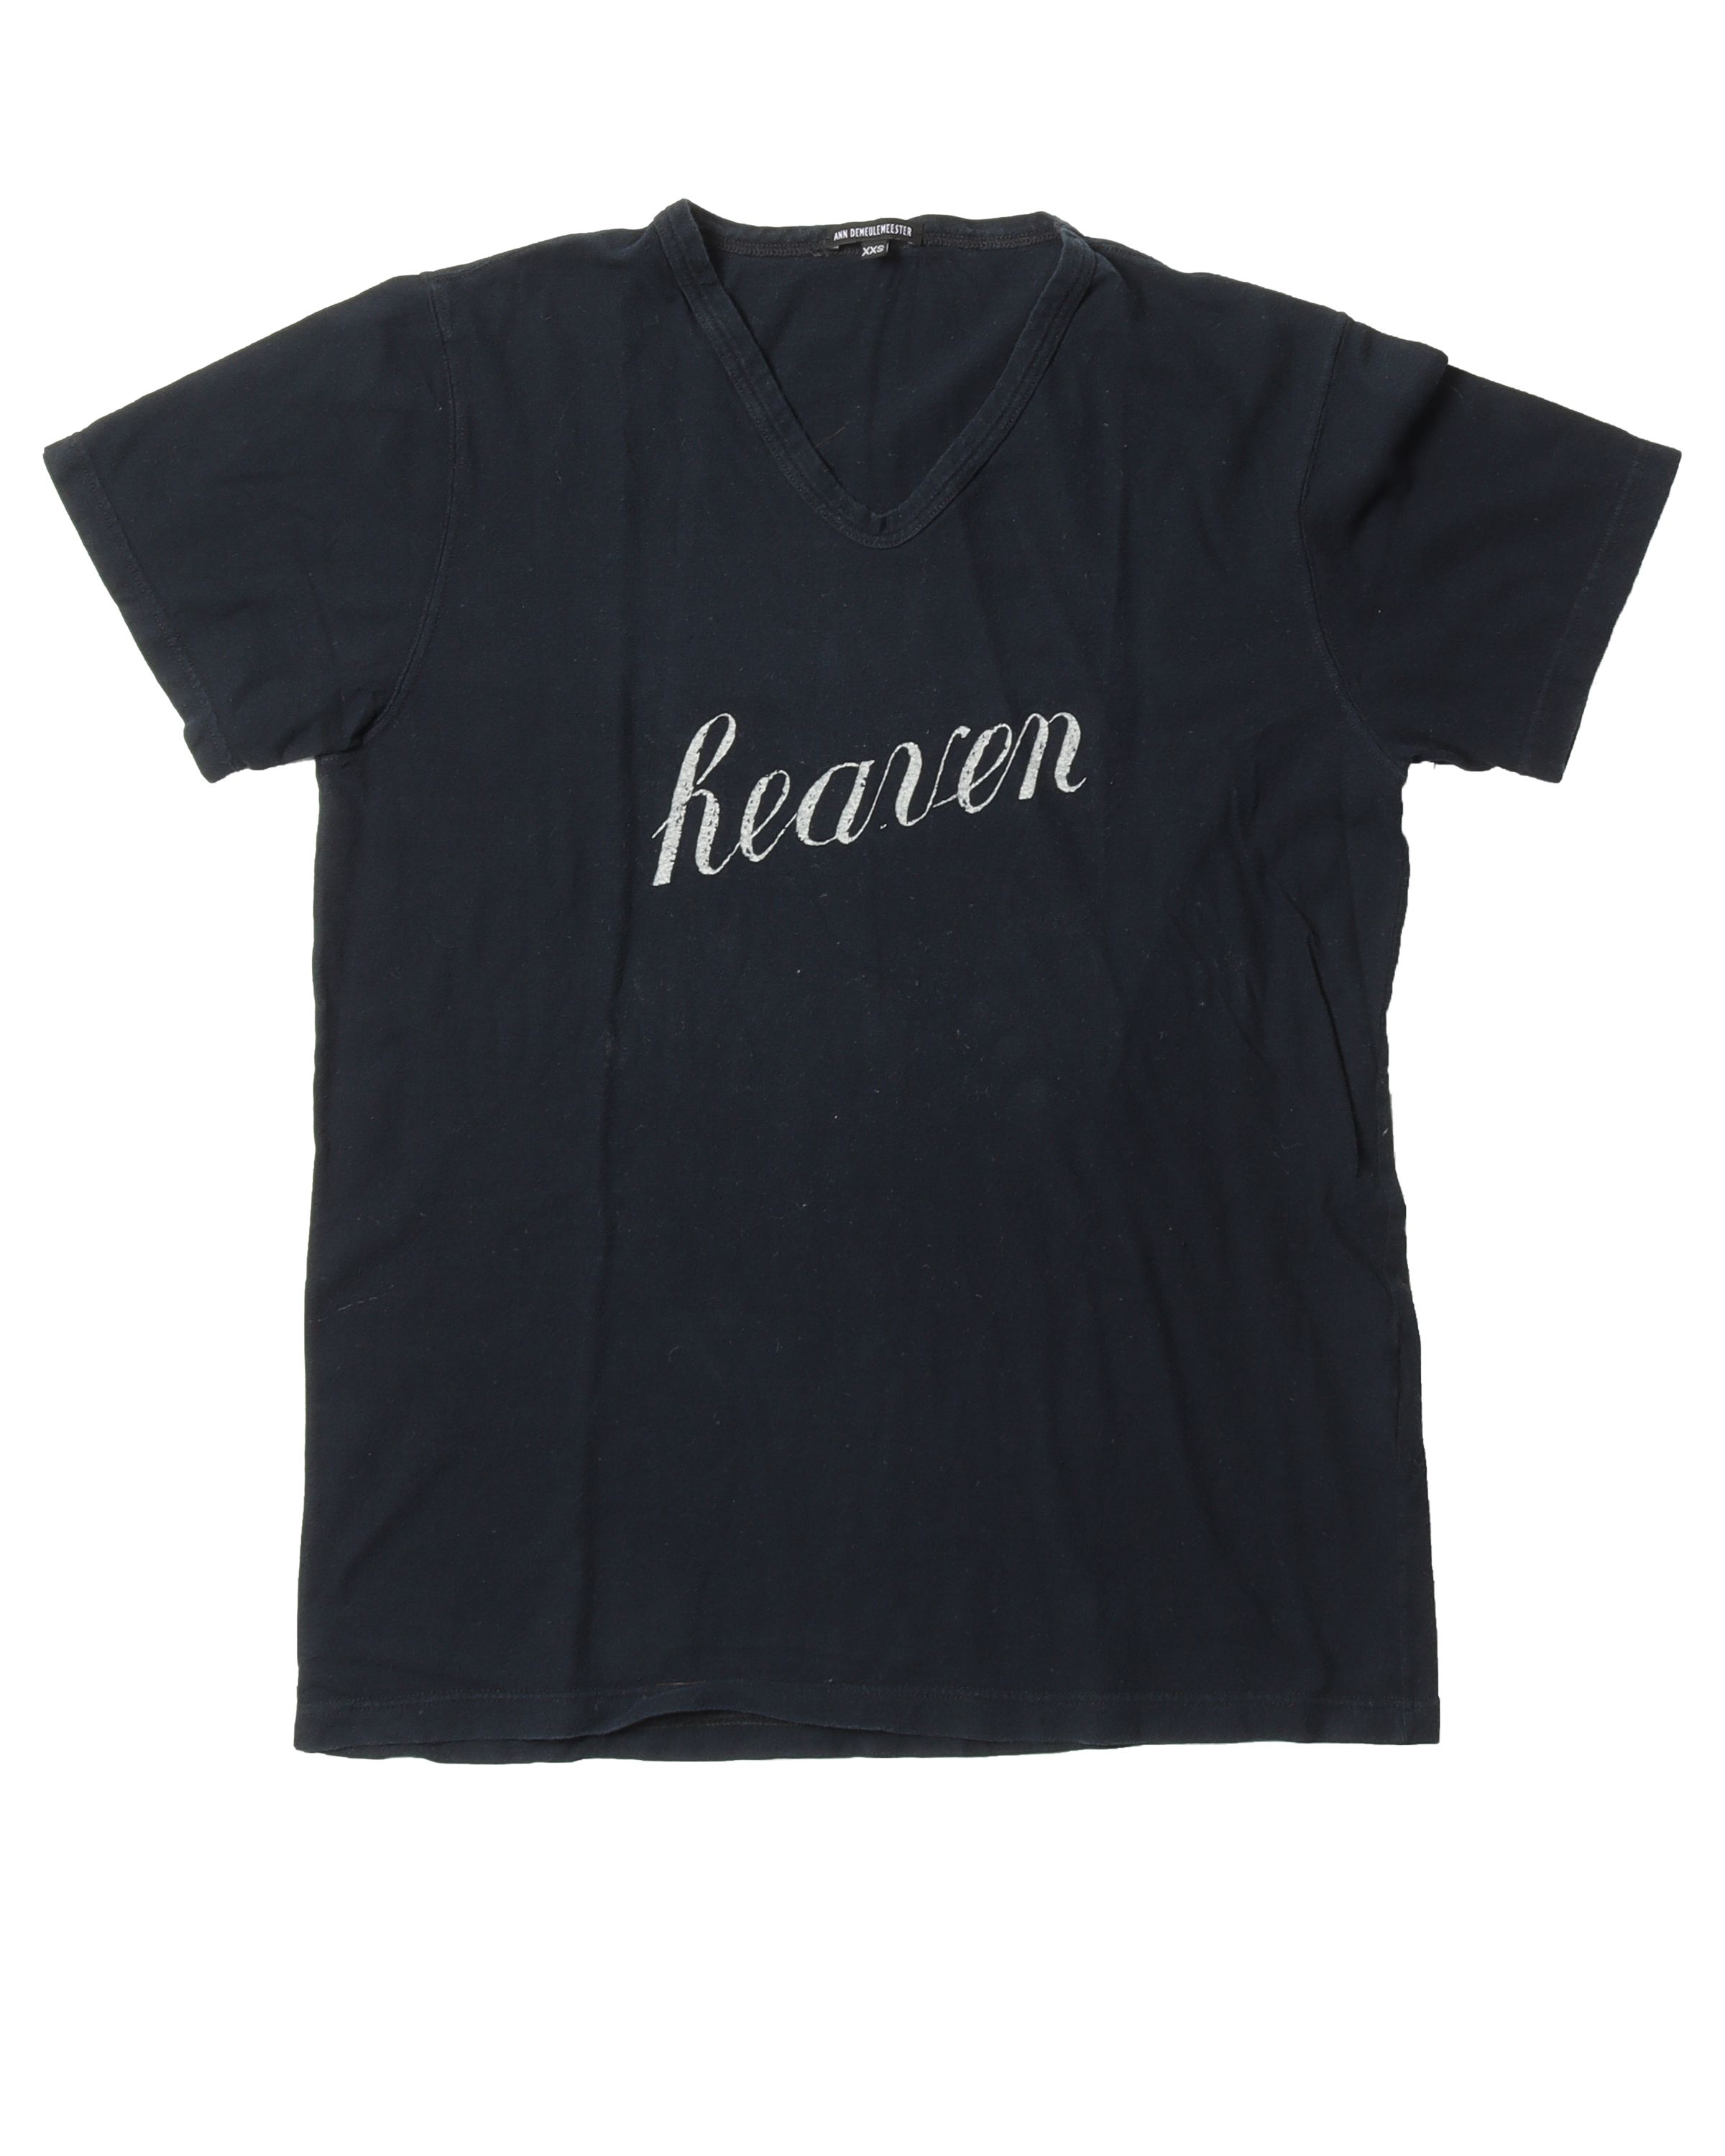 "Heaven" T-Shirt